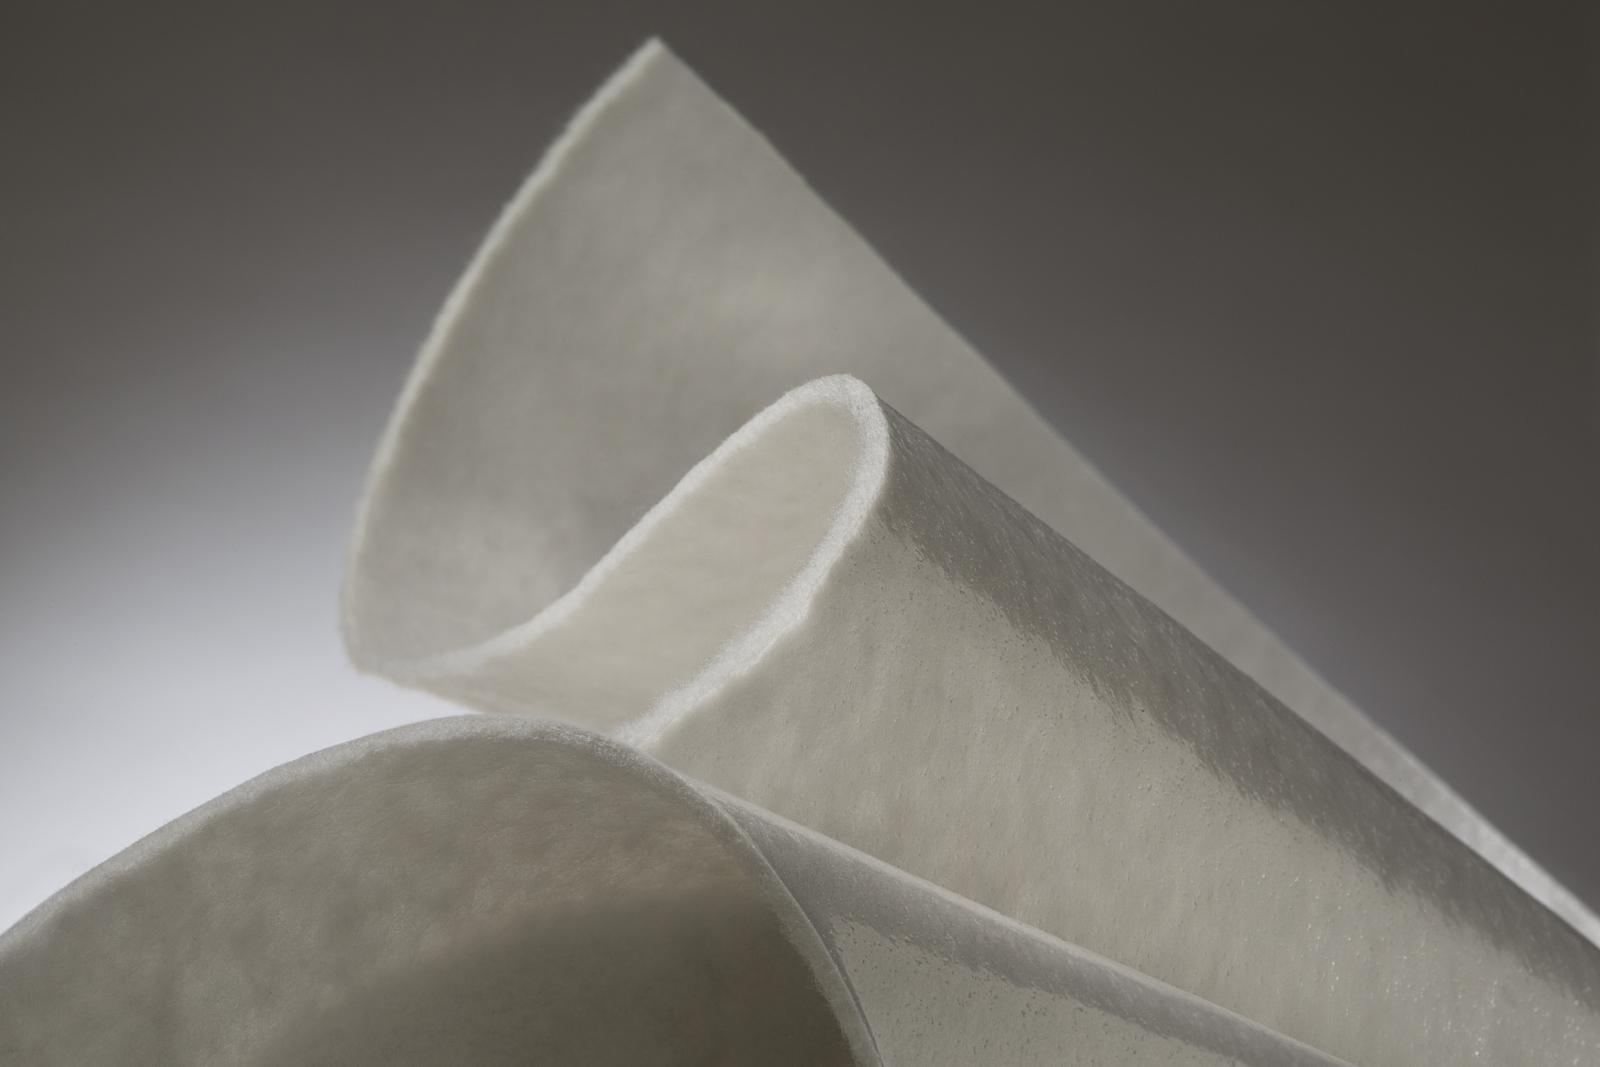 Industrial Fabrics extrusion coating & laminating